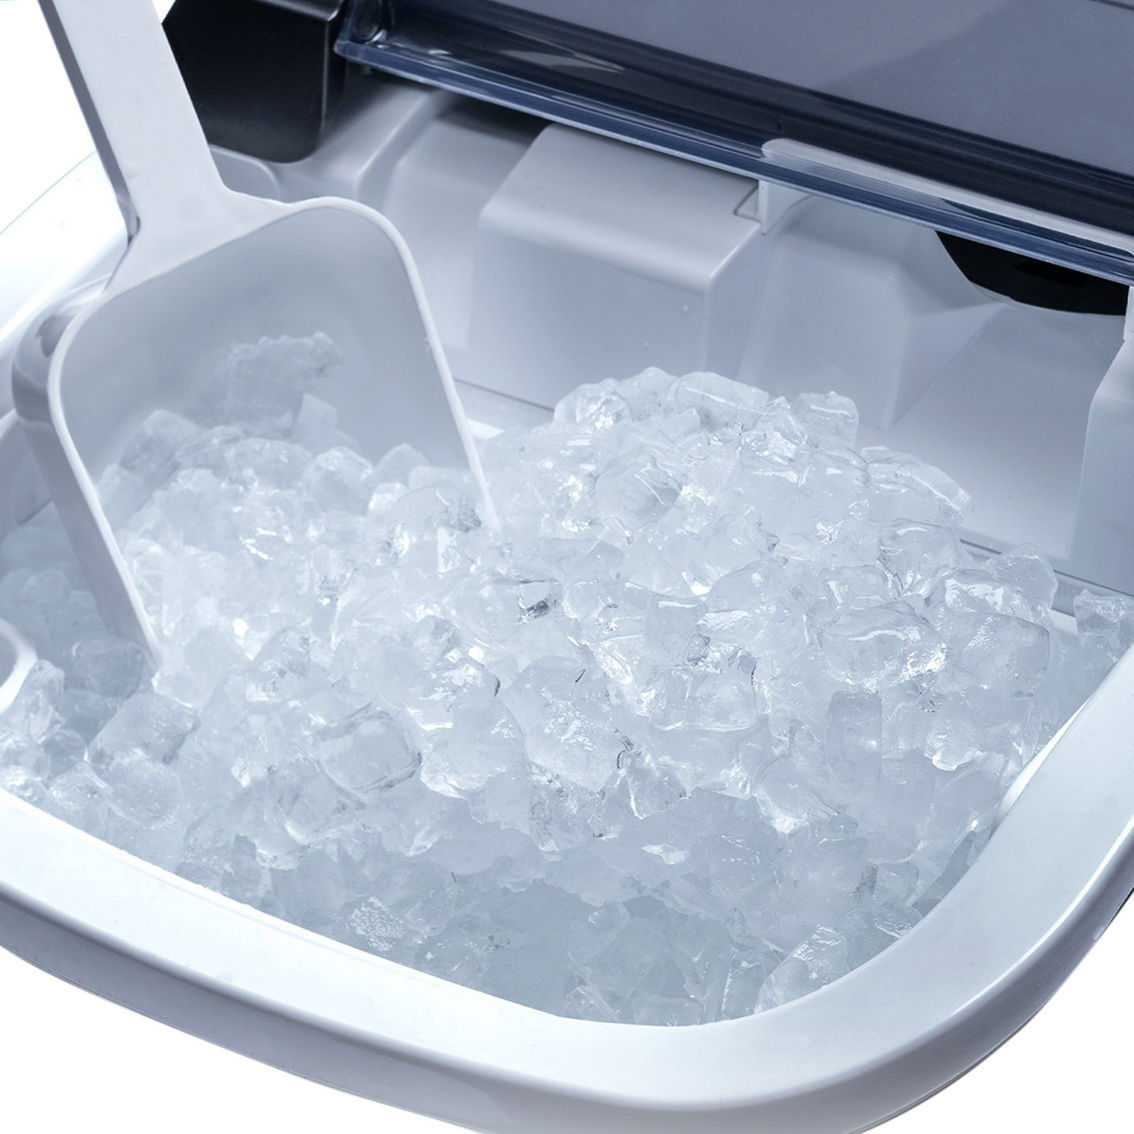 New Air LLC 26 lb. Countertop Nugget Ice Maker - Image 4 of 6